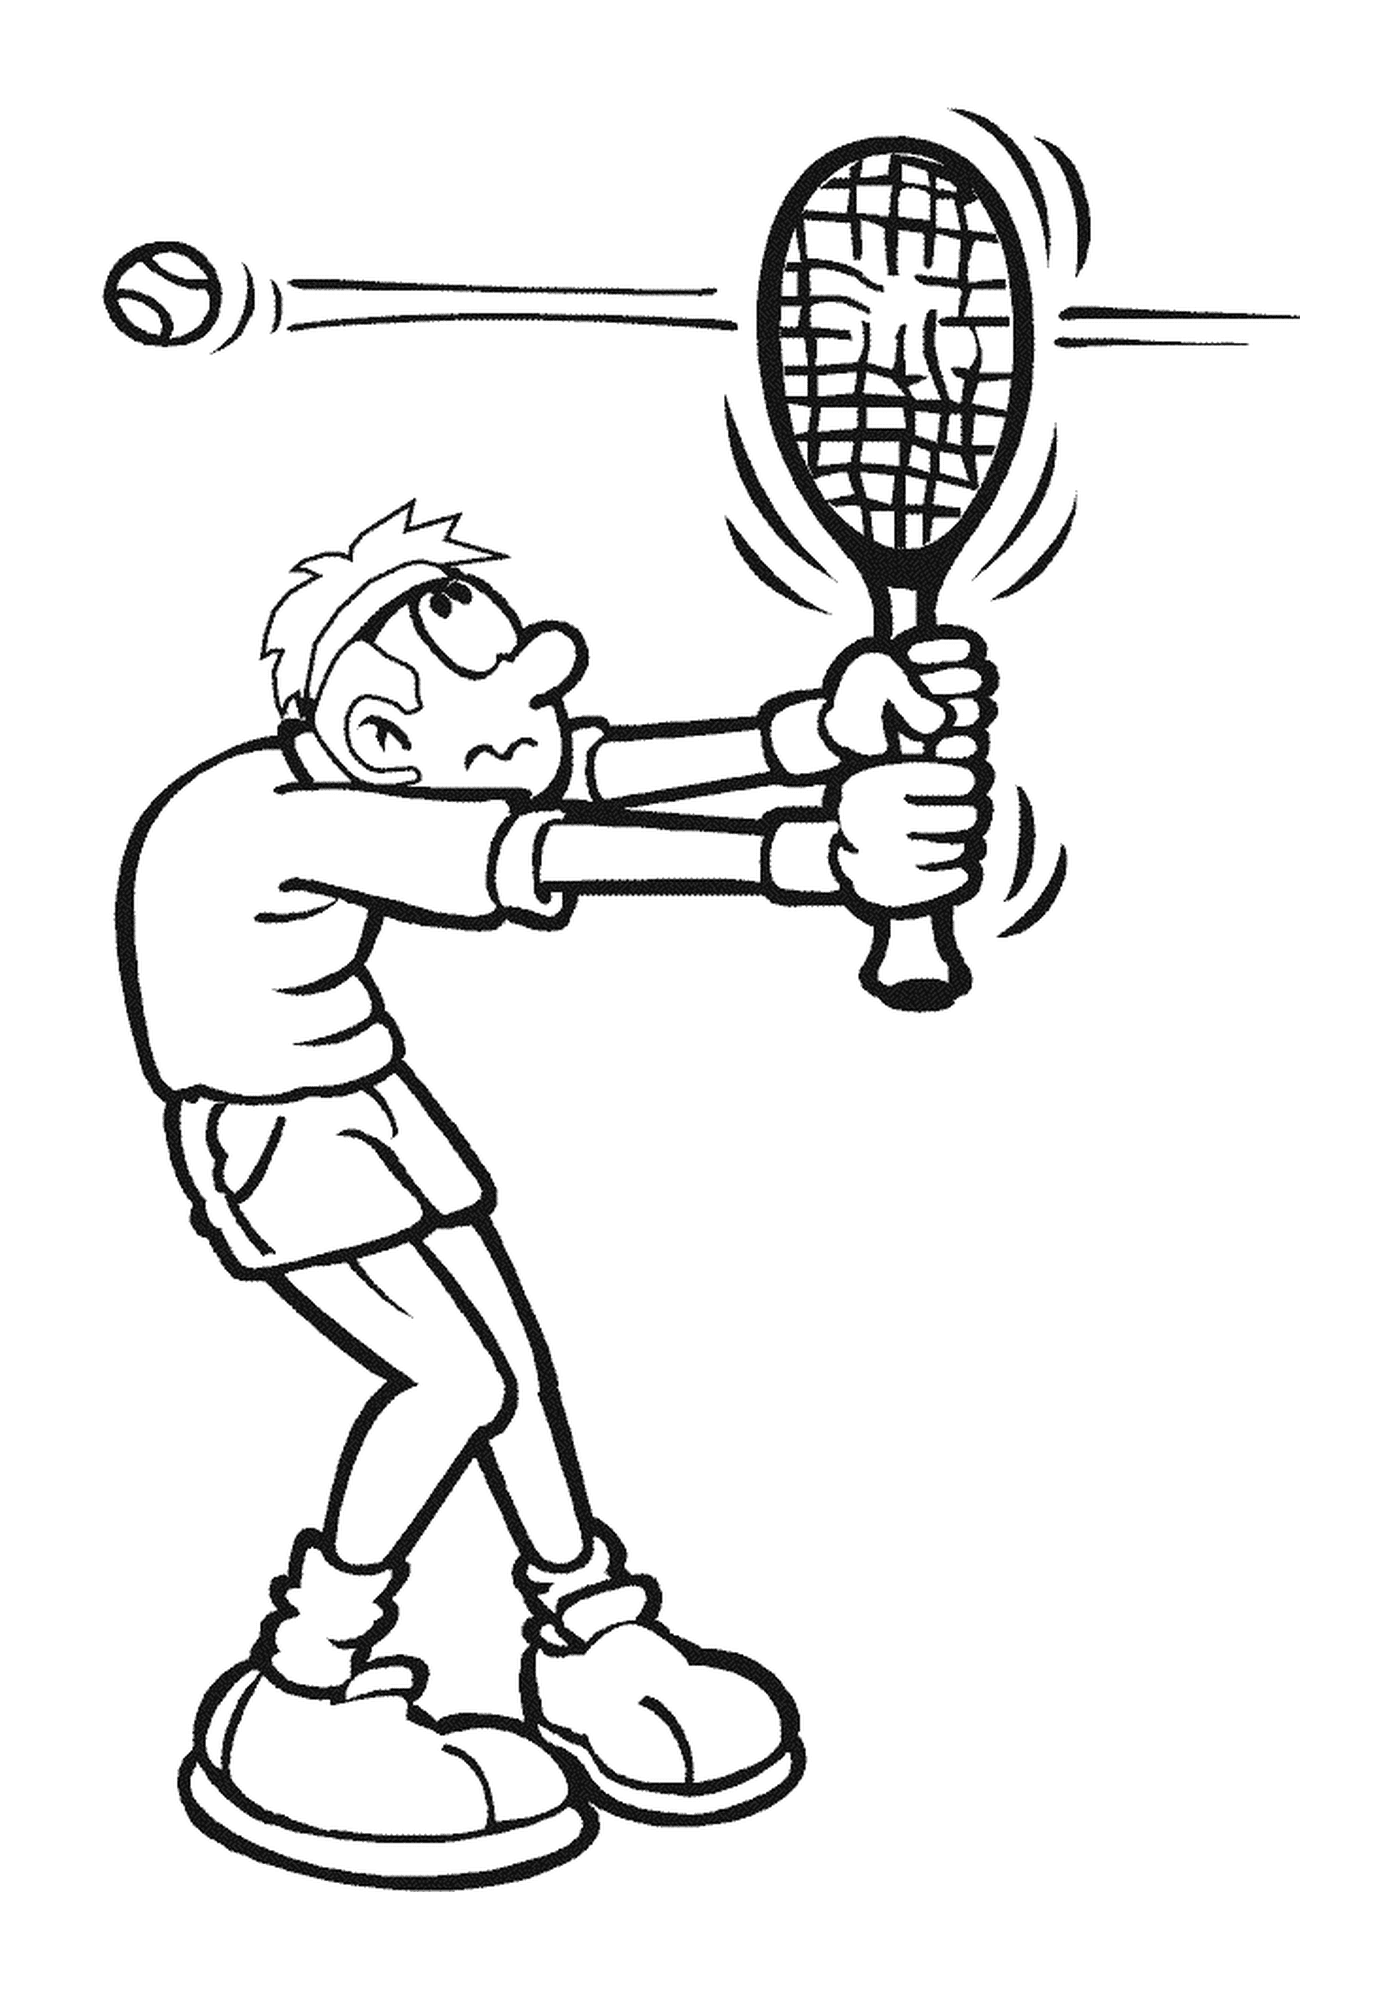  man holds tennis racket 